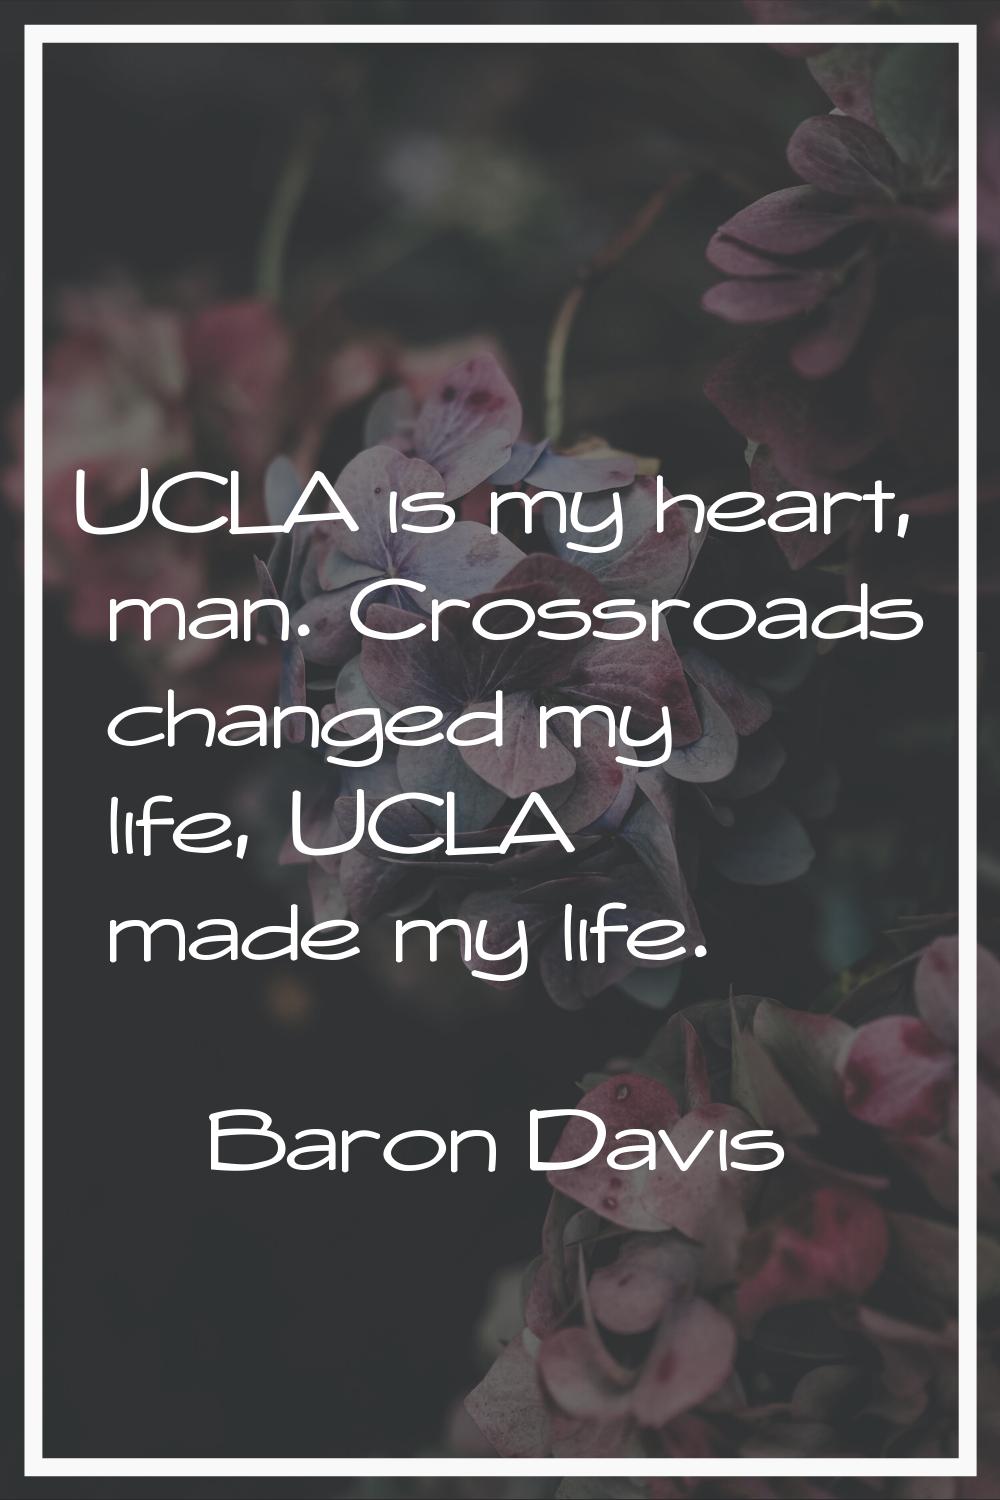 UCLA is my heart, man. Crossroads changed my life, UCLA made my life.